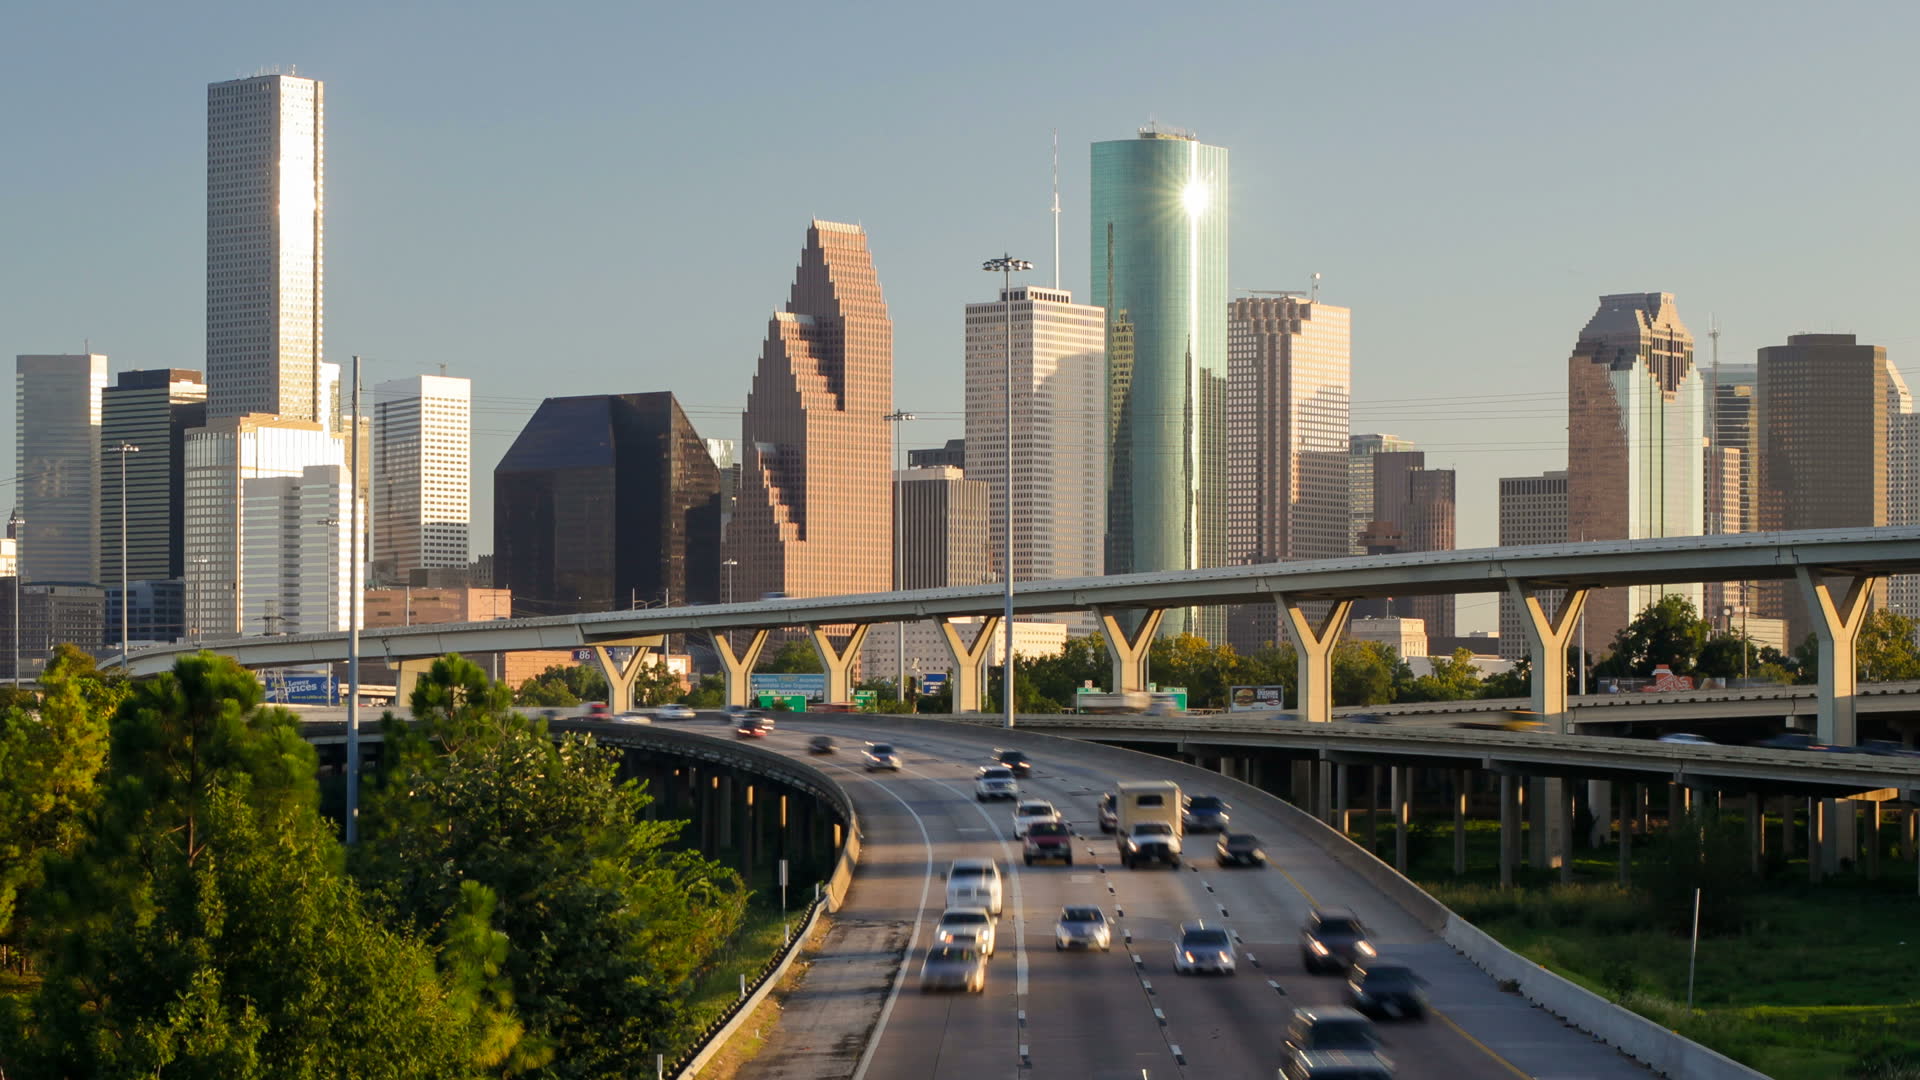   circa november houston texas usa highways and downtown city skyline